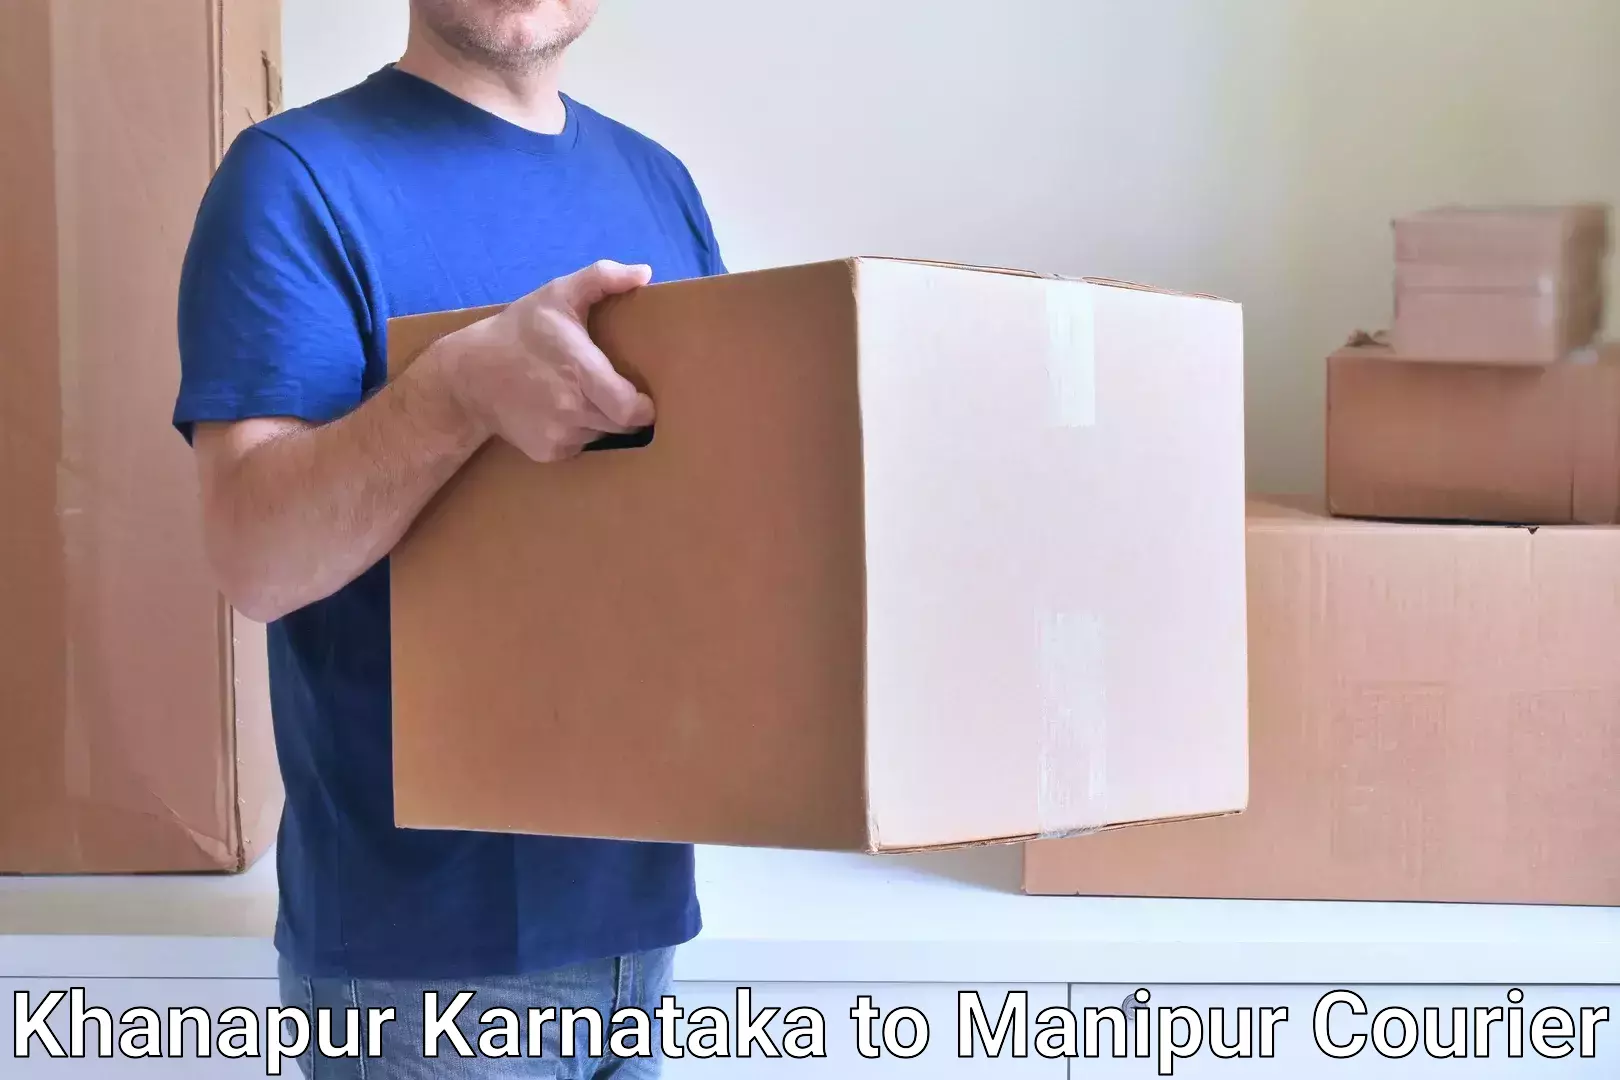 Reliable courier service Khanapur Karnataka to Chandel